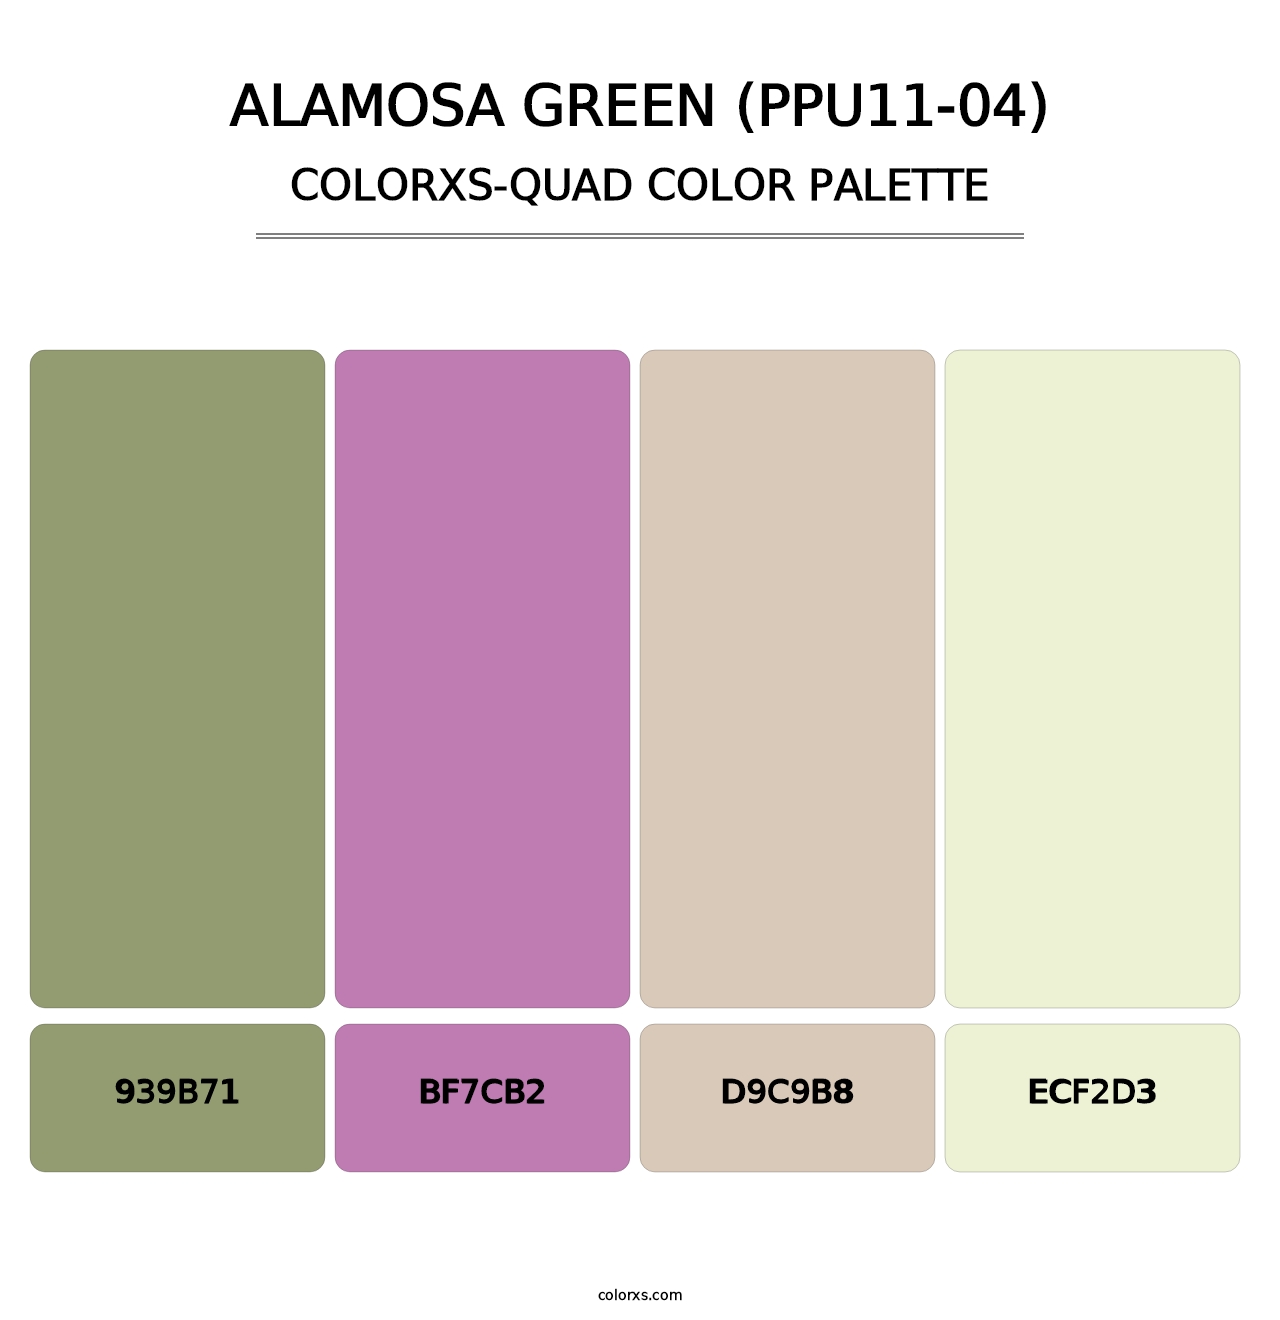 Alamosa Green (PPU11-04) - Colorxs Quad Palette